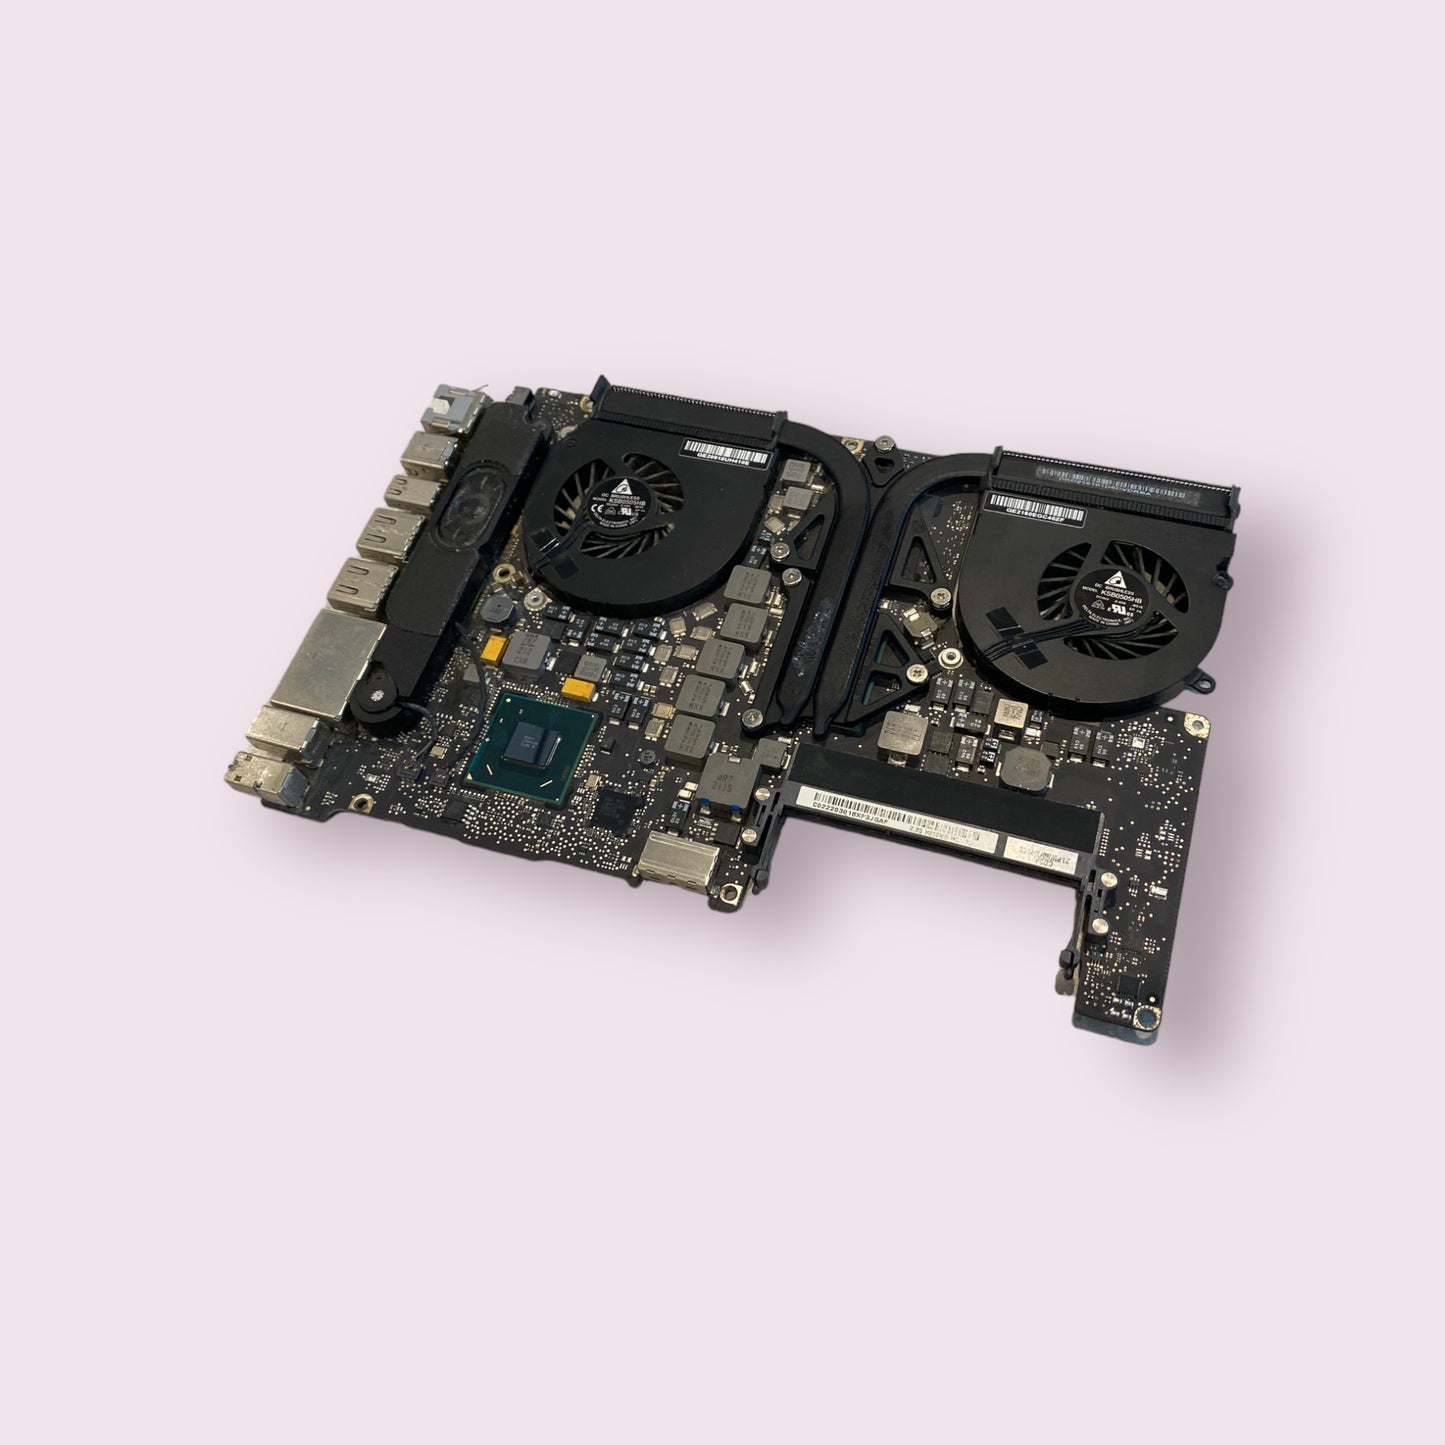 Macbook Pro 15" 2012 A1286 Motherboard 820-3330-A i7 Processor - Genuine Pull Part